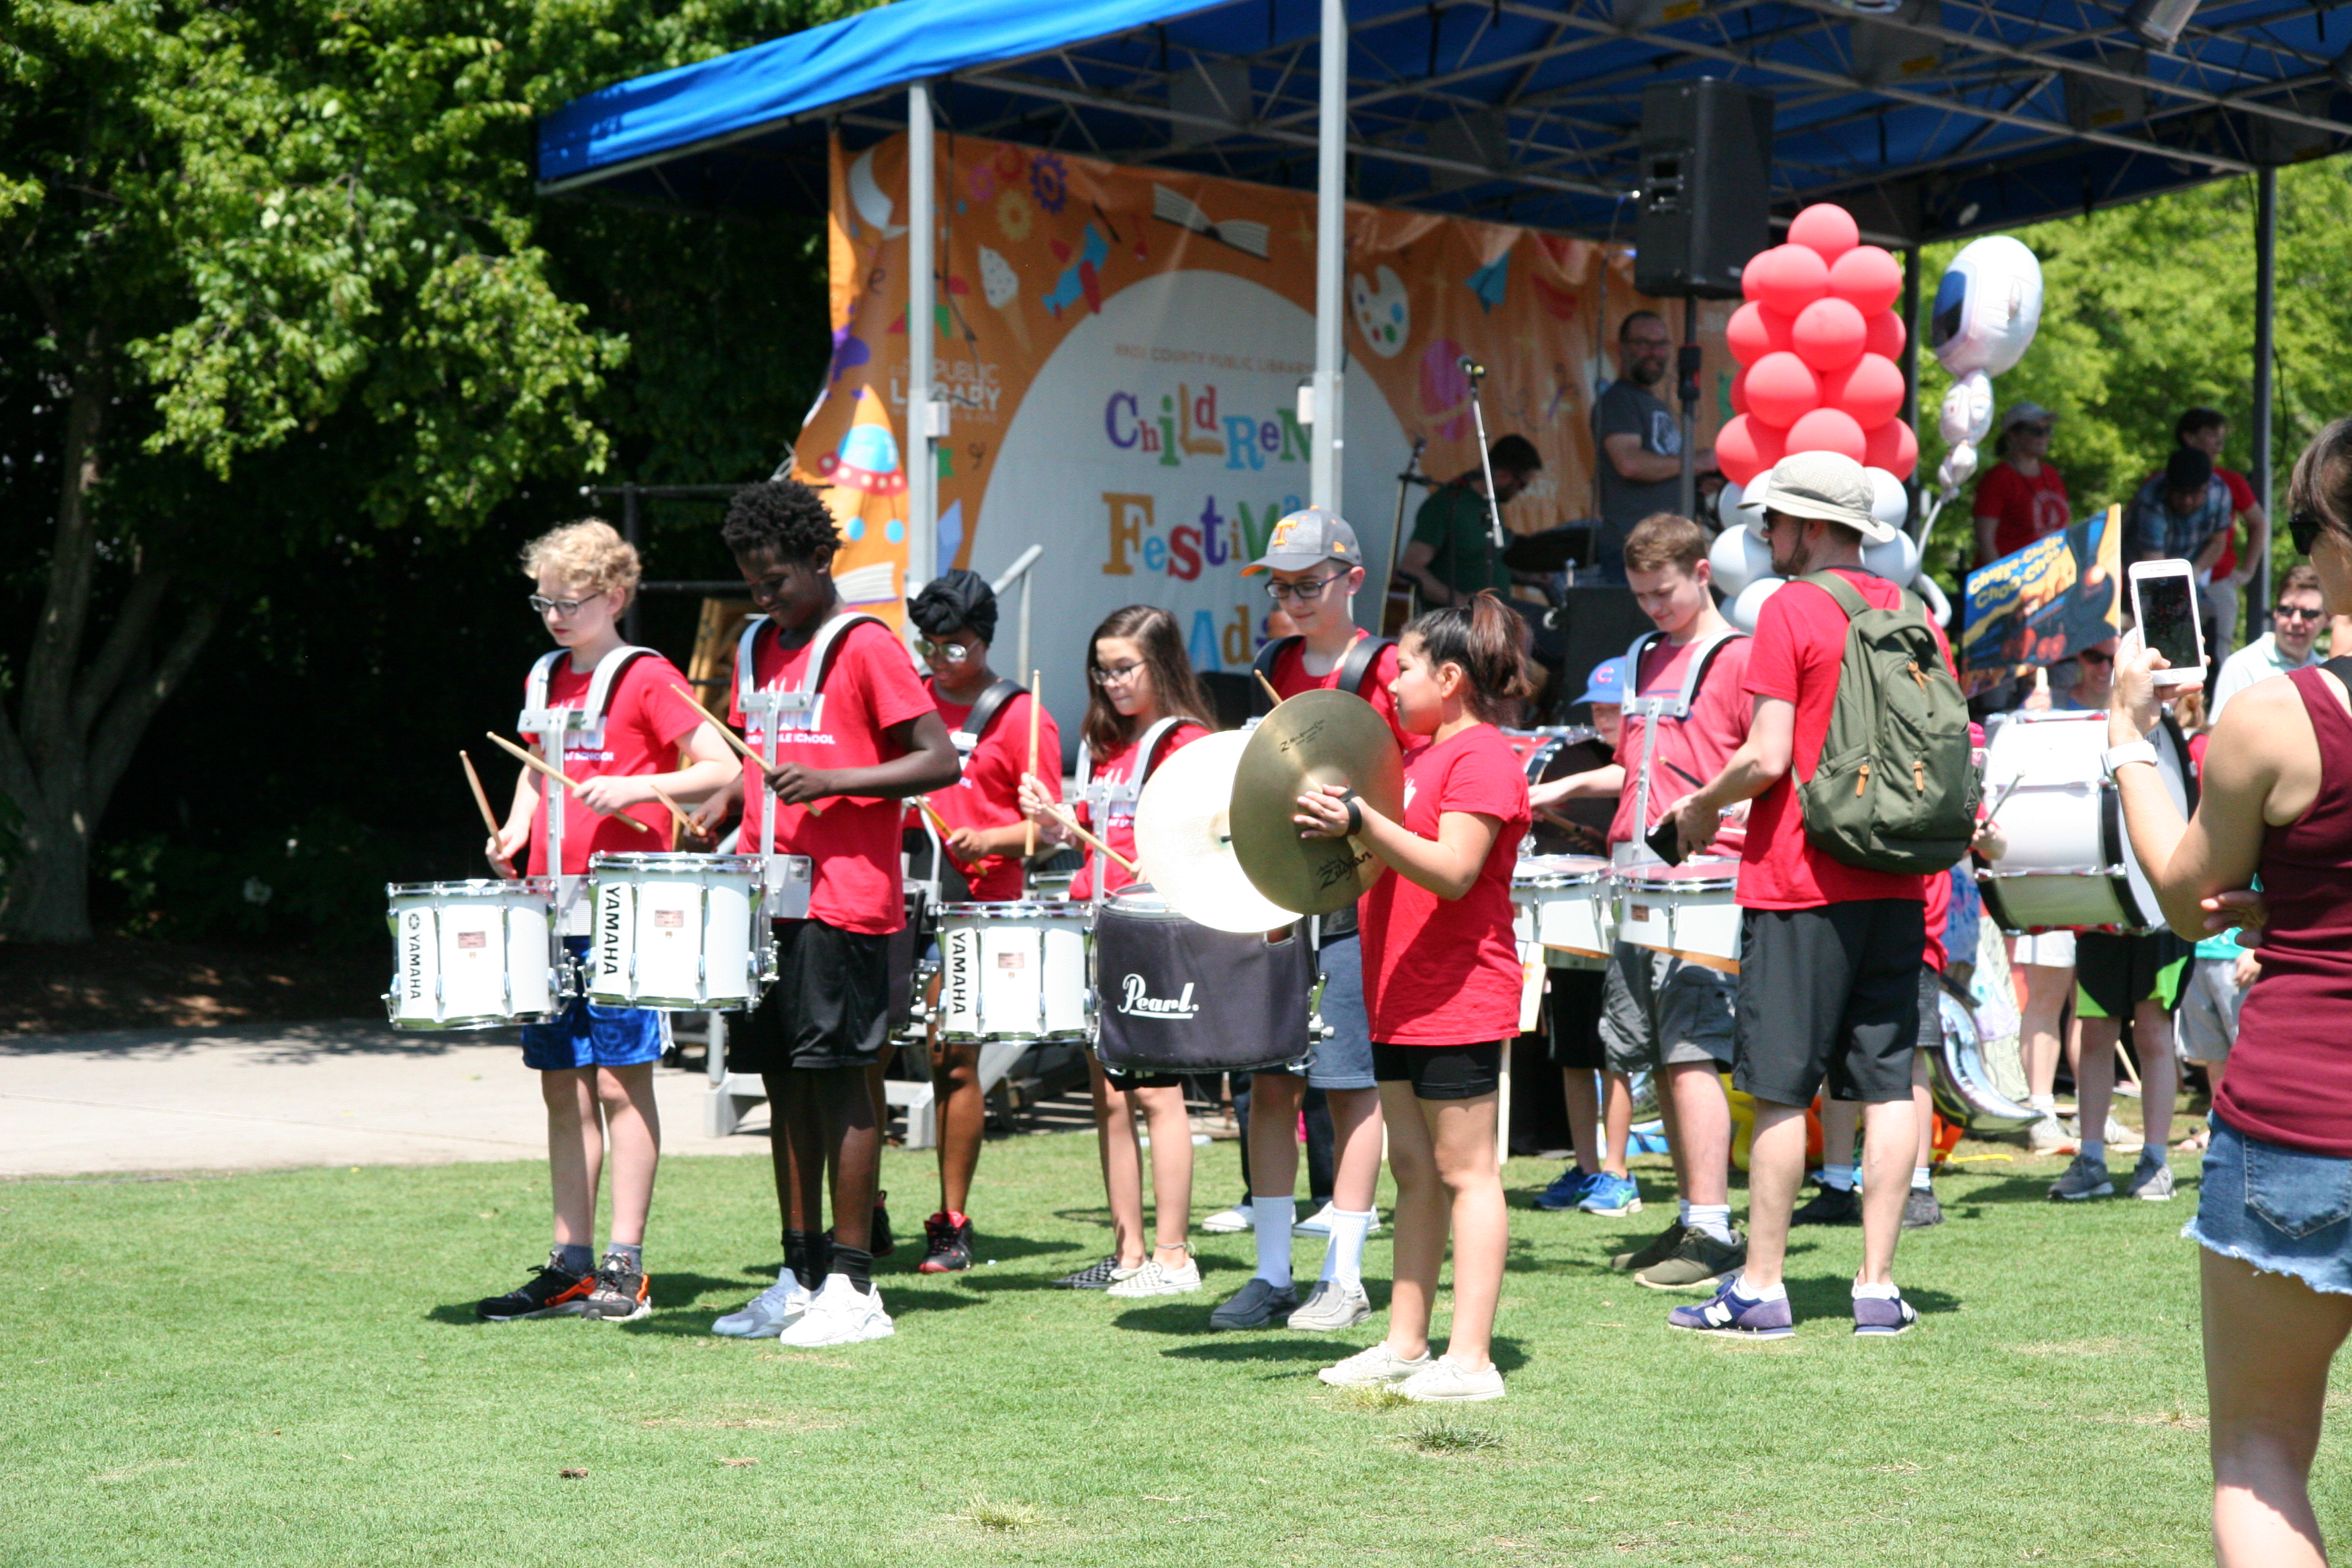 Children's band at the Children's Festival of Reading